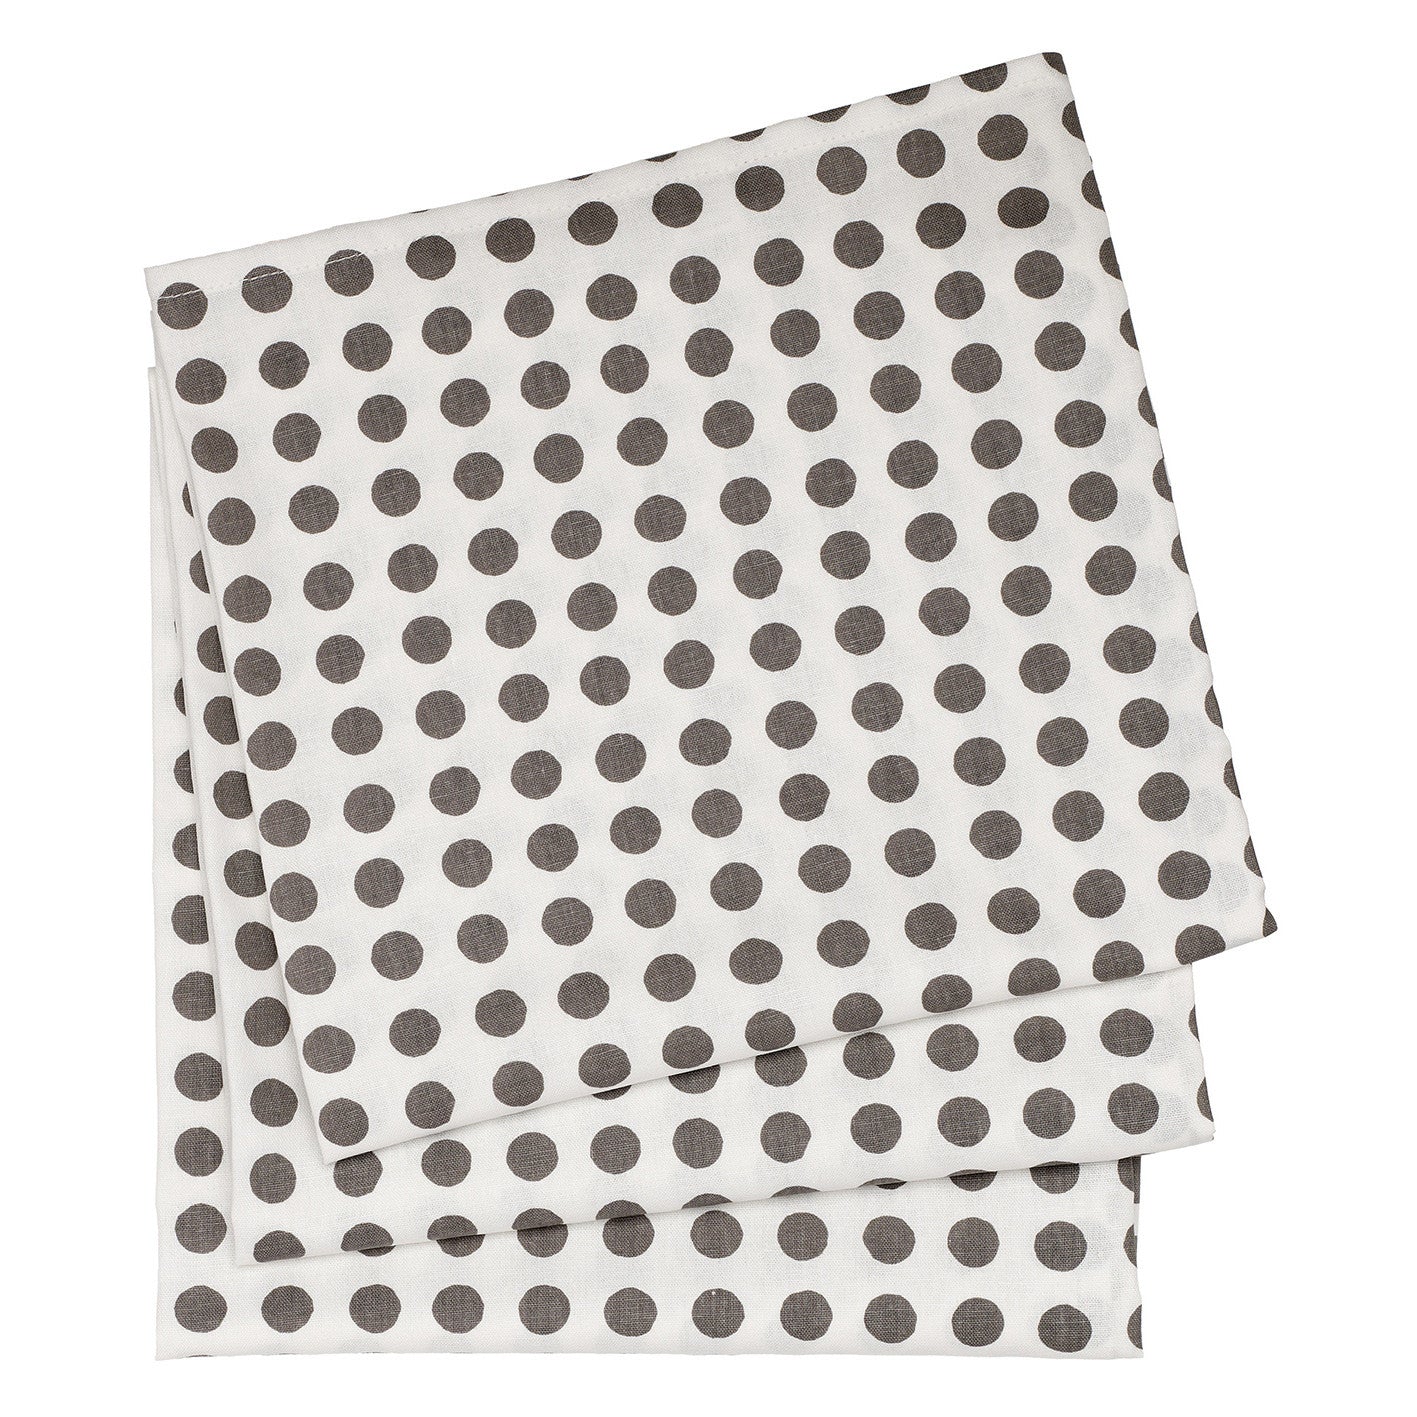 London Polka Dot Linen Cotton Tablecloth in Stone Grey